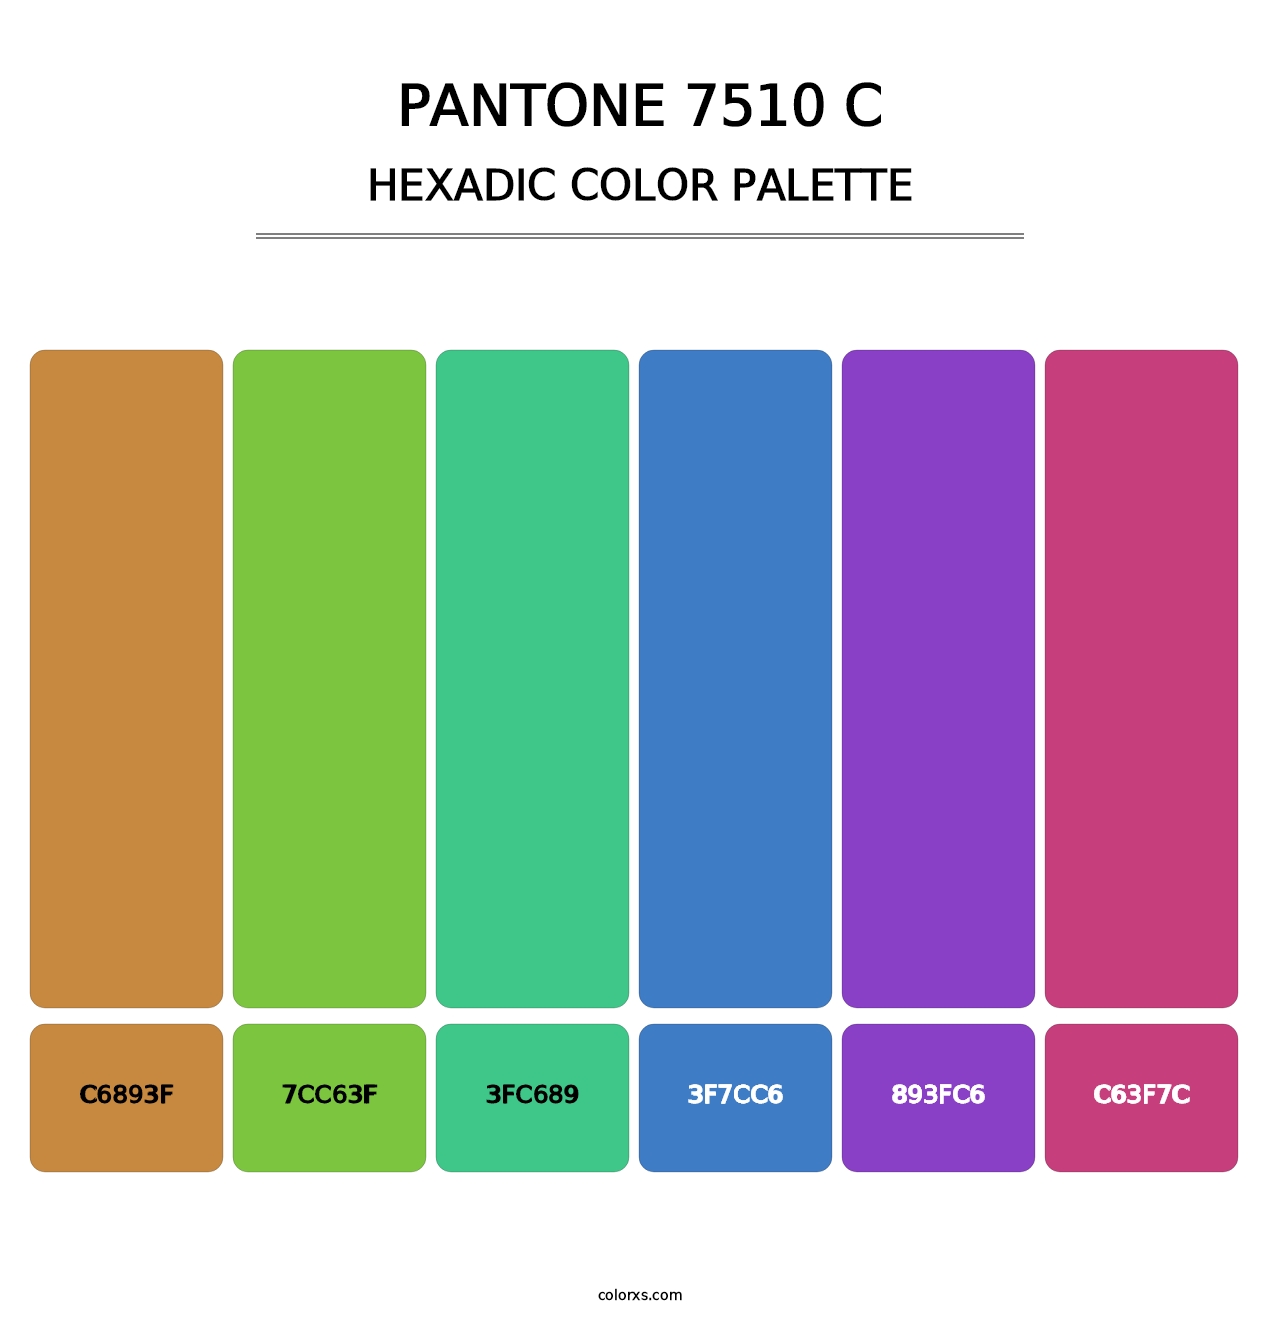 PANTONE 7510 C - Hexadic Color Palette